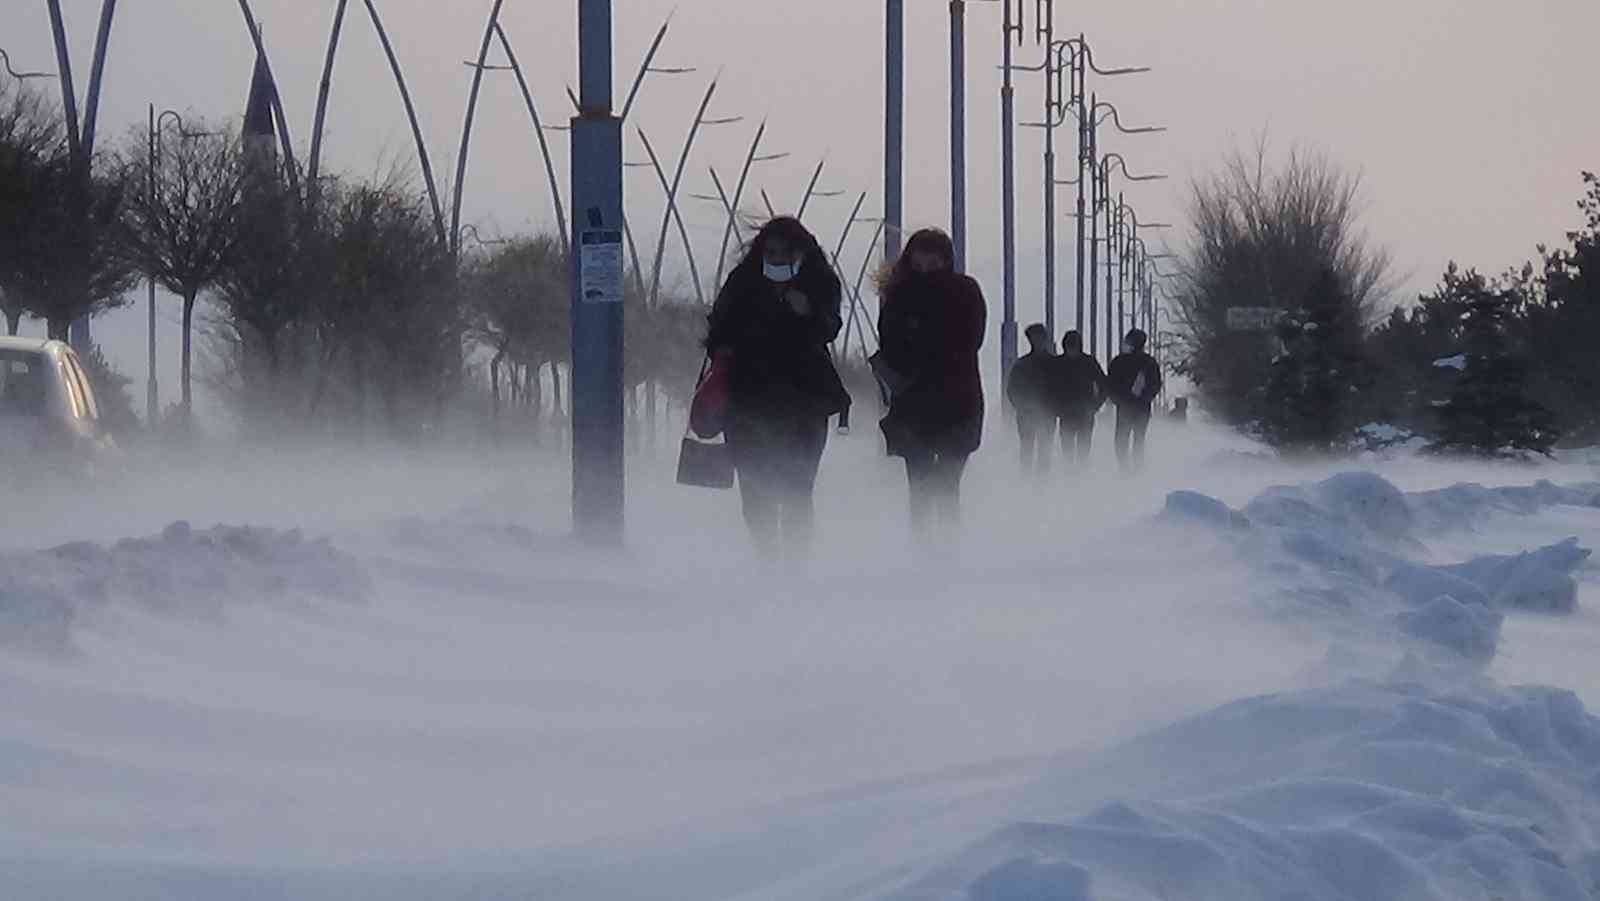 Kars’ta 24 köy yolu ulaşıma kapalı #kars